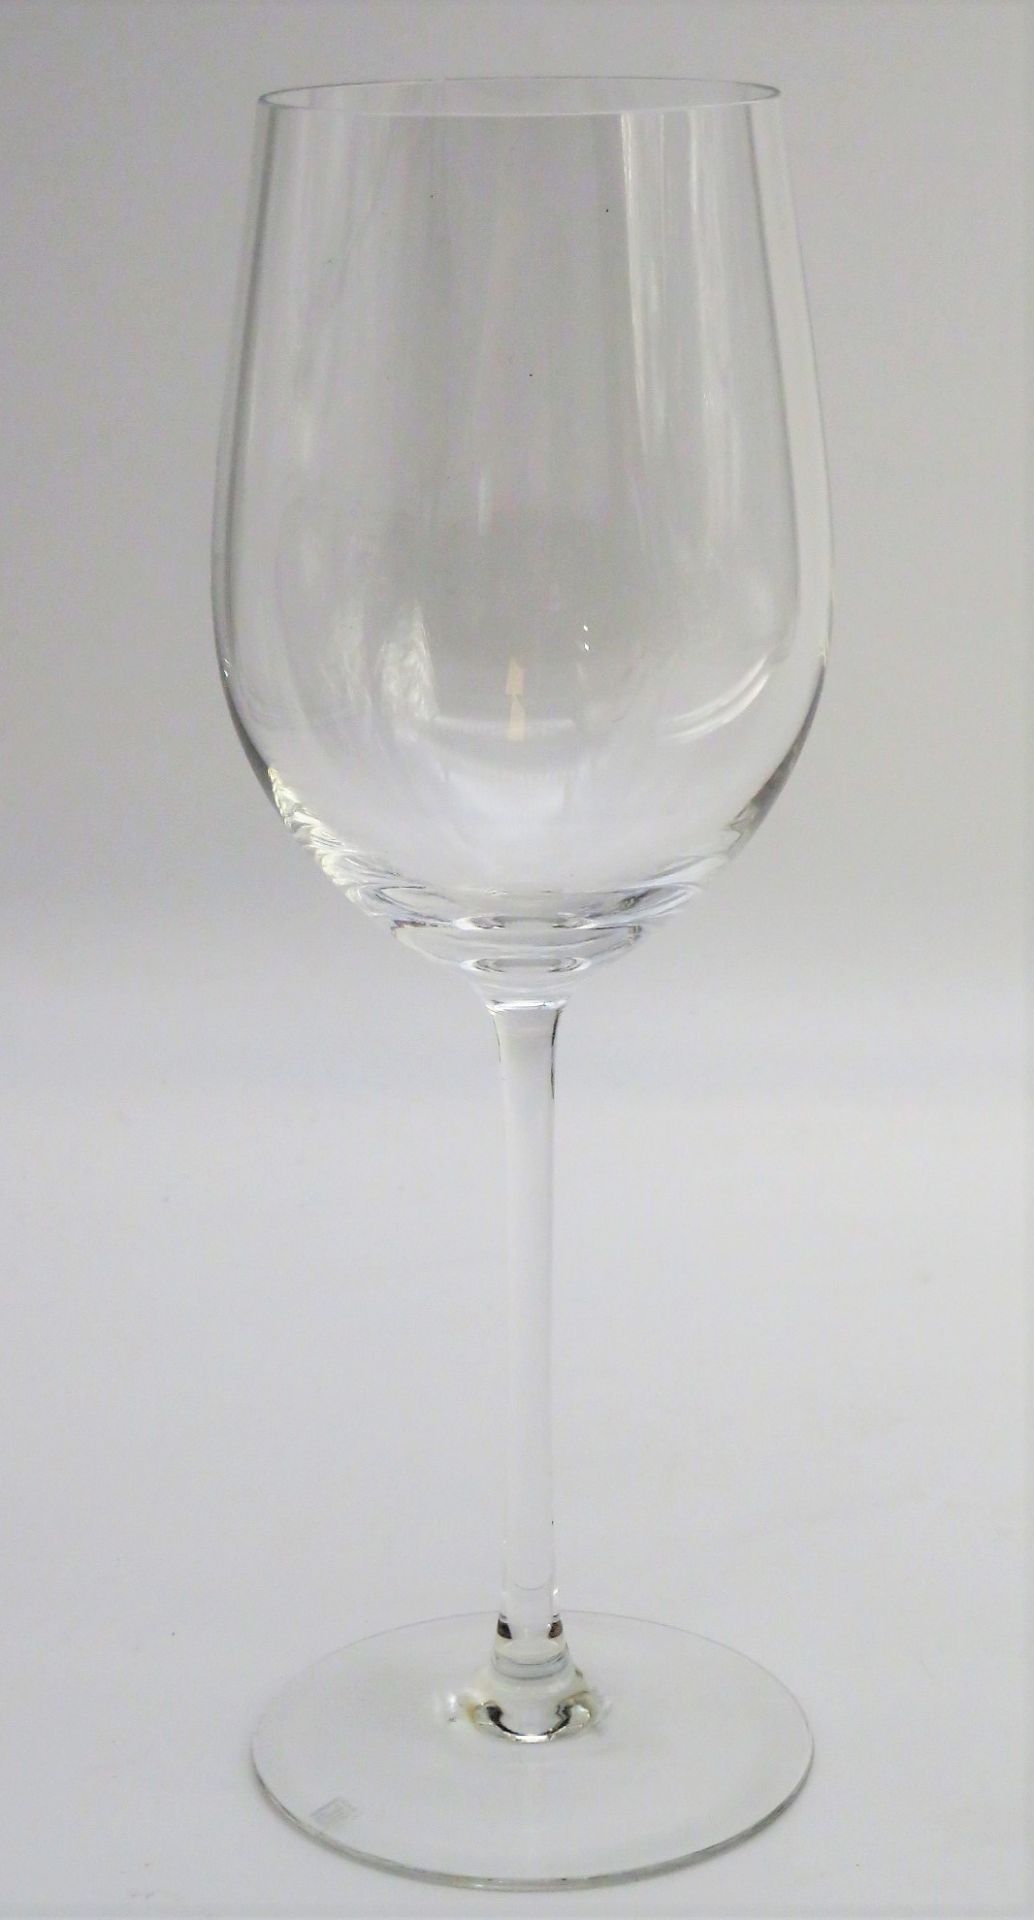 10 Rotweingläser, Riedel, farbloses Glas, gem., h 21,7 cm.